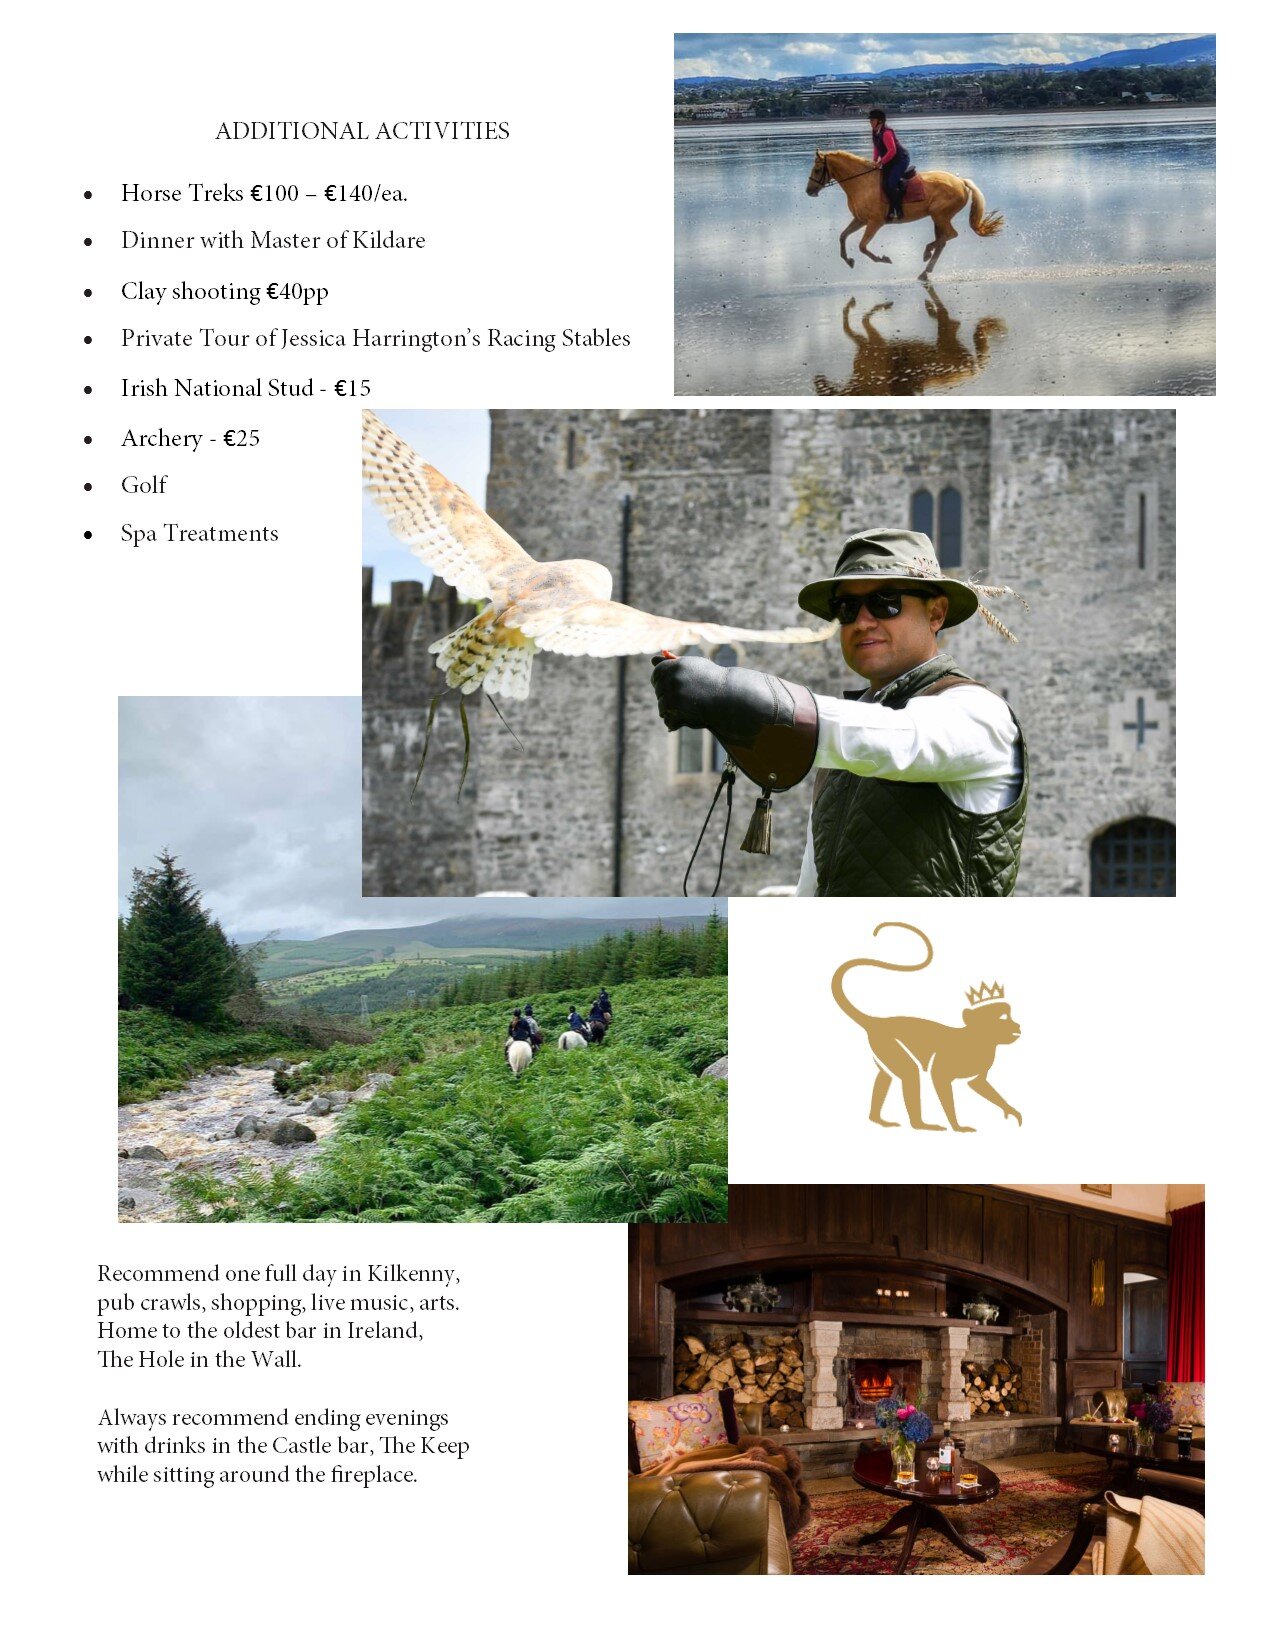 RNT Dublin Horse Show 2020 page 3.jpg